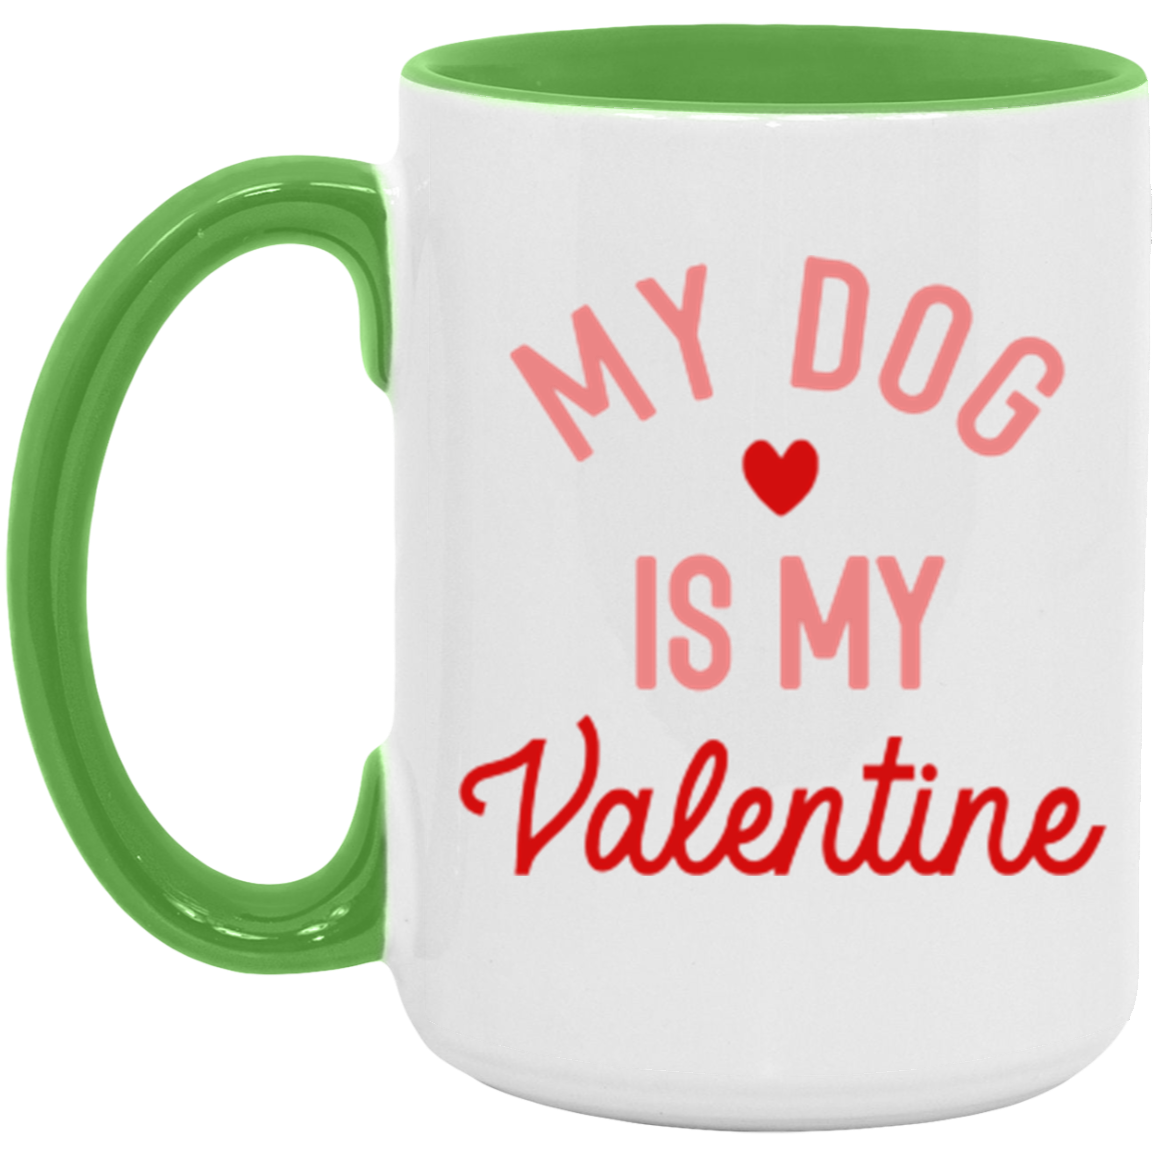 My Dog is my Valentine Mug